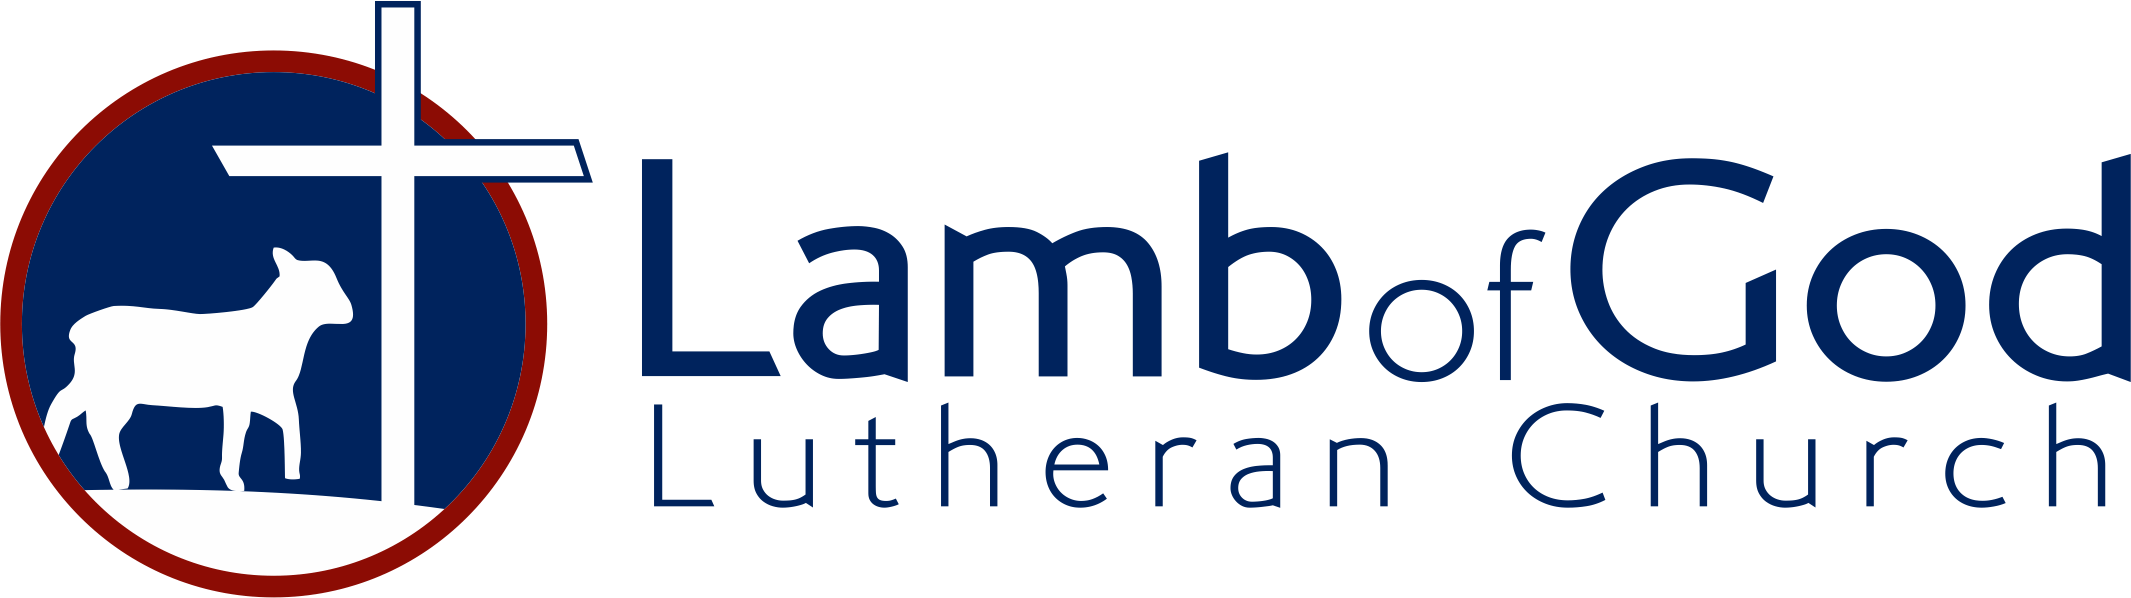 Lamb-of-God-logo-landscape